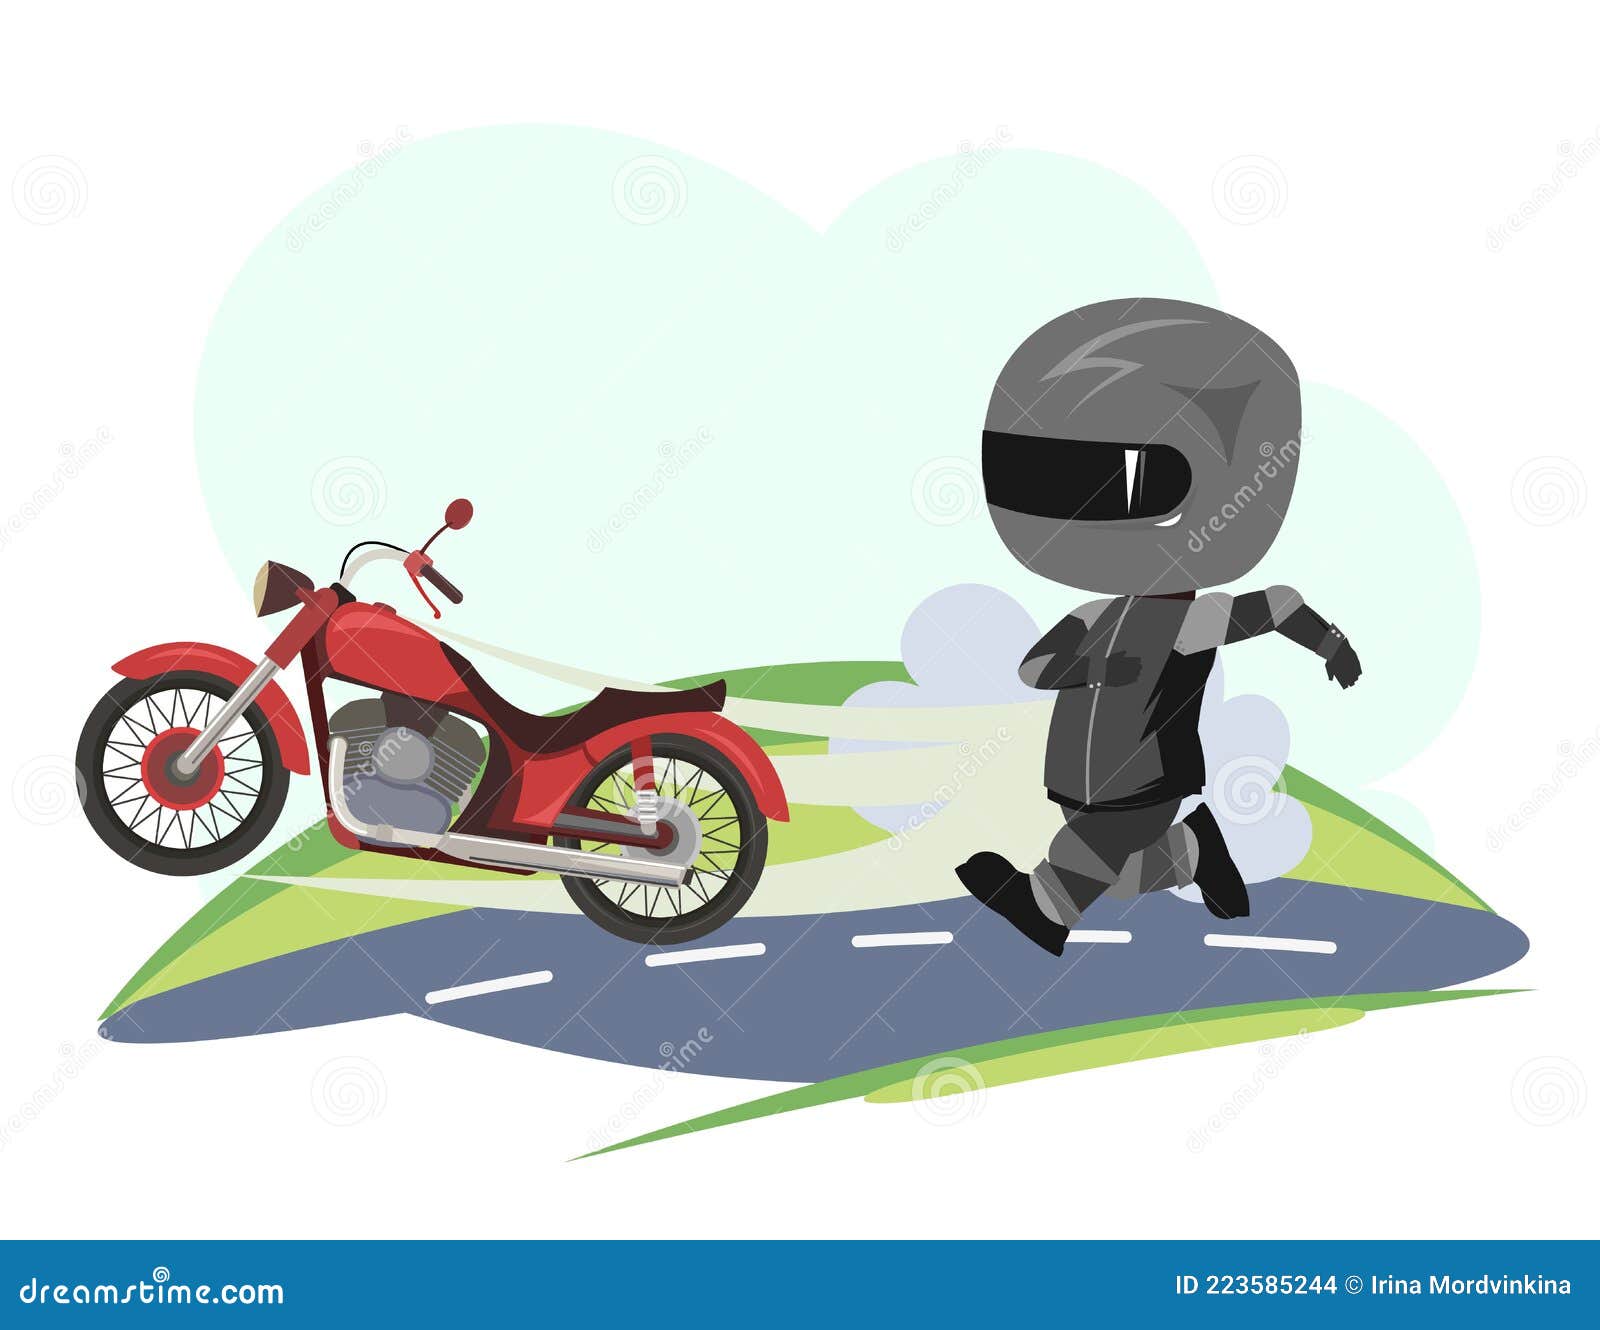 Biker Cartoon. Child Illustration. Chasing Bike. Sports Uniform and Helmet.  Cool Motorcycle. Chopper Stock Vector - Illustration of helmet, uniform:  223585244